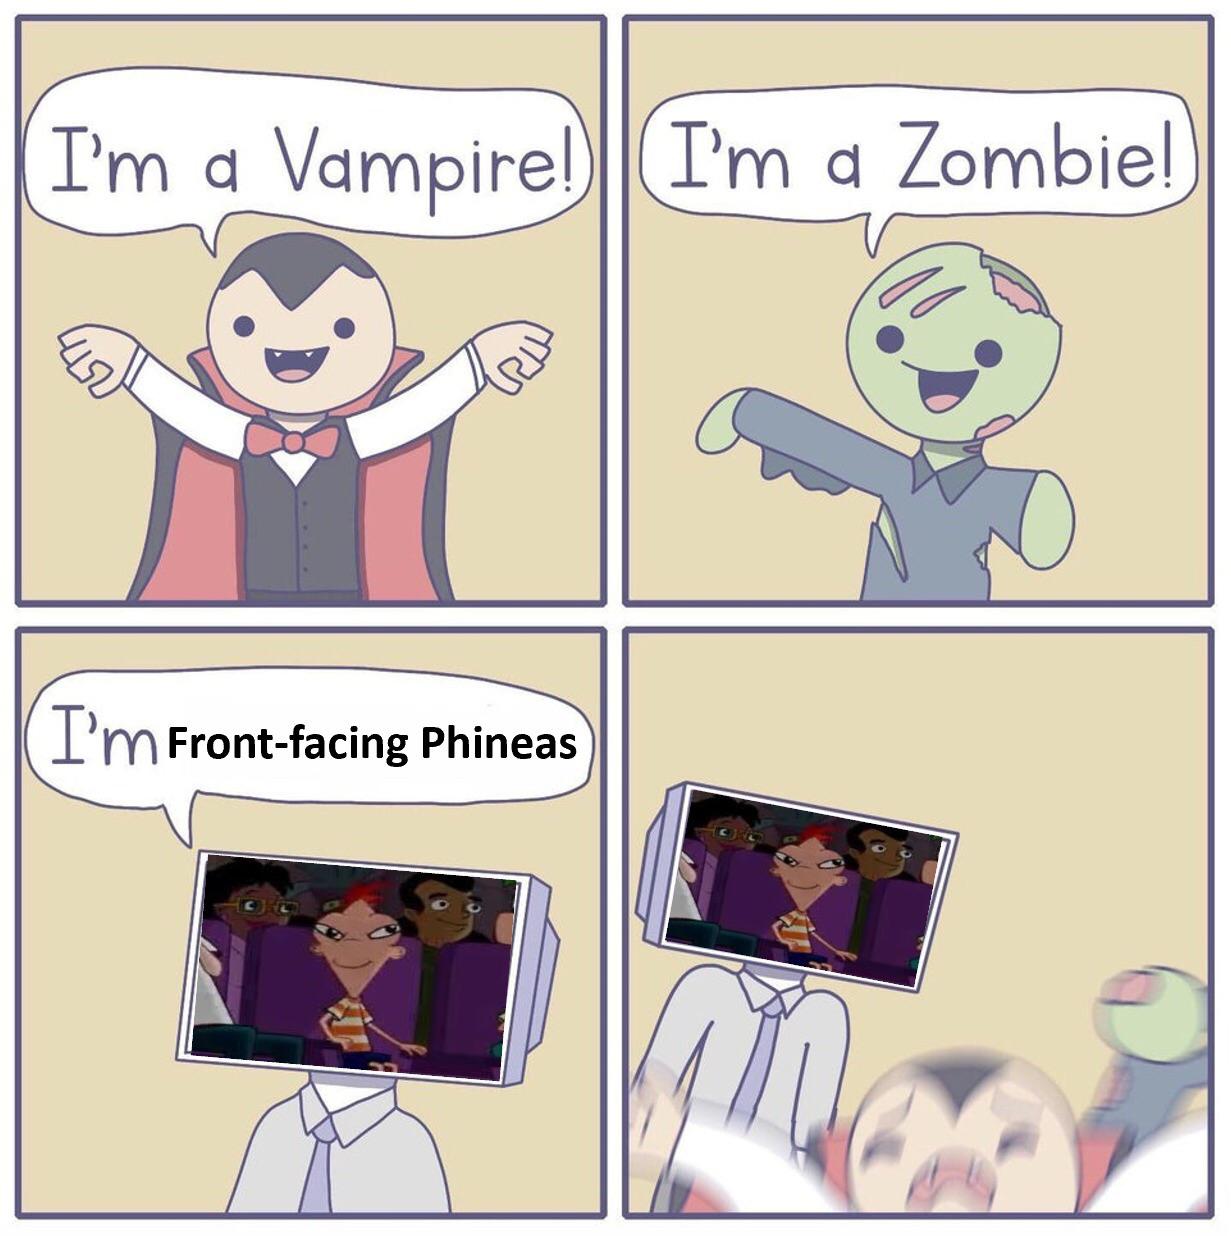 dank memes reddit - I'm a Vampire! || I'm a Zombie! I'm Frontfacing Phineas